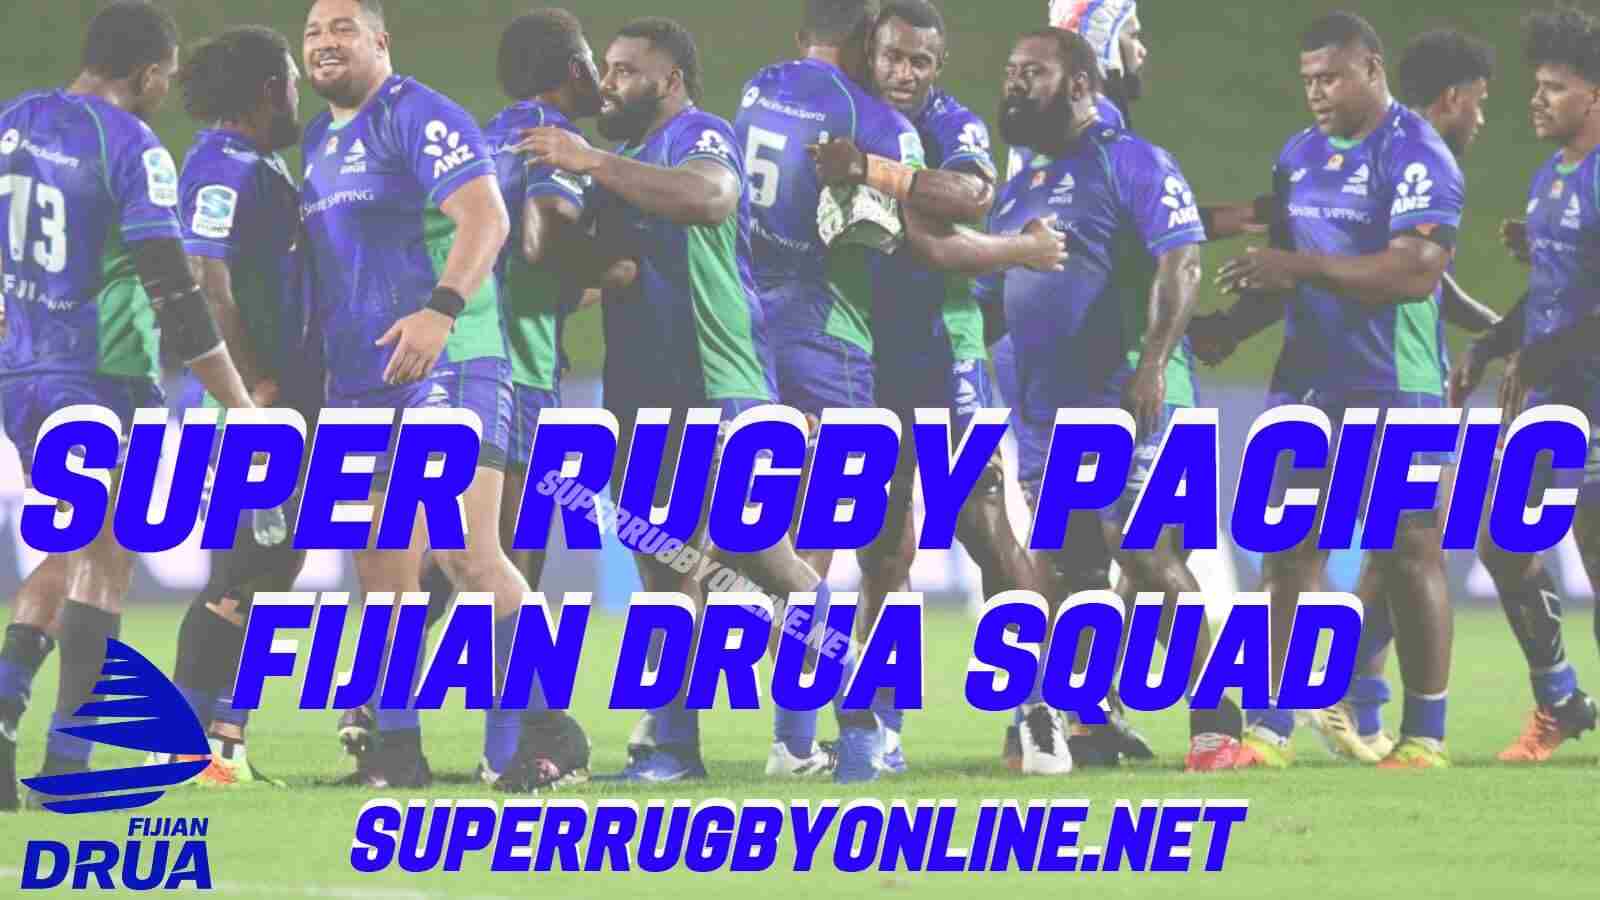 fijian-drua-squad-super-rugby